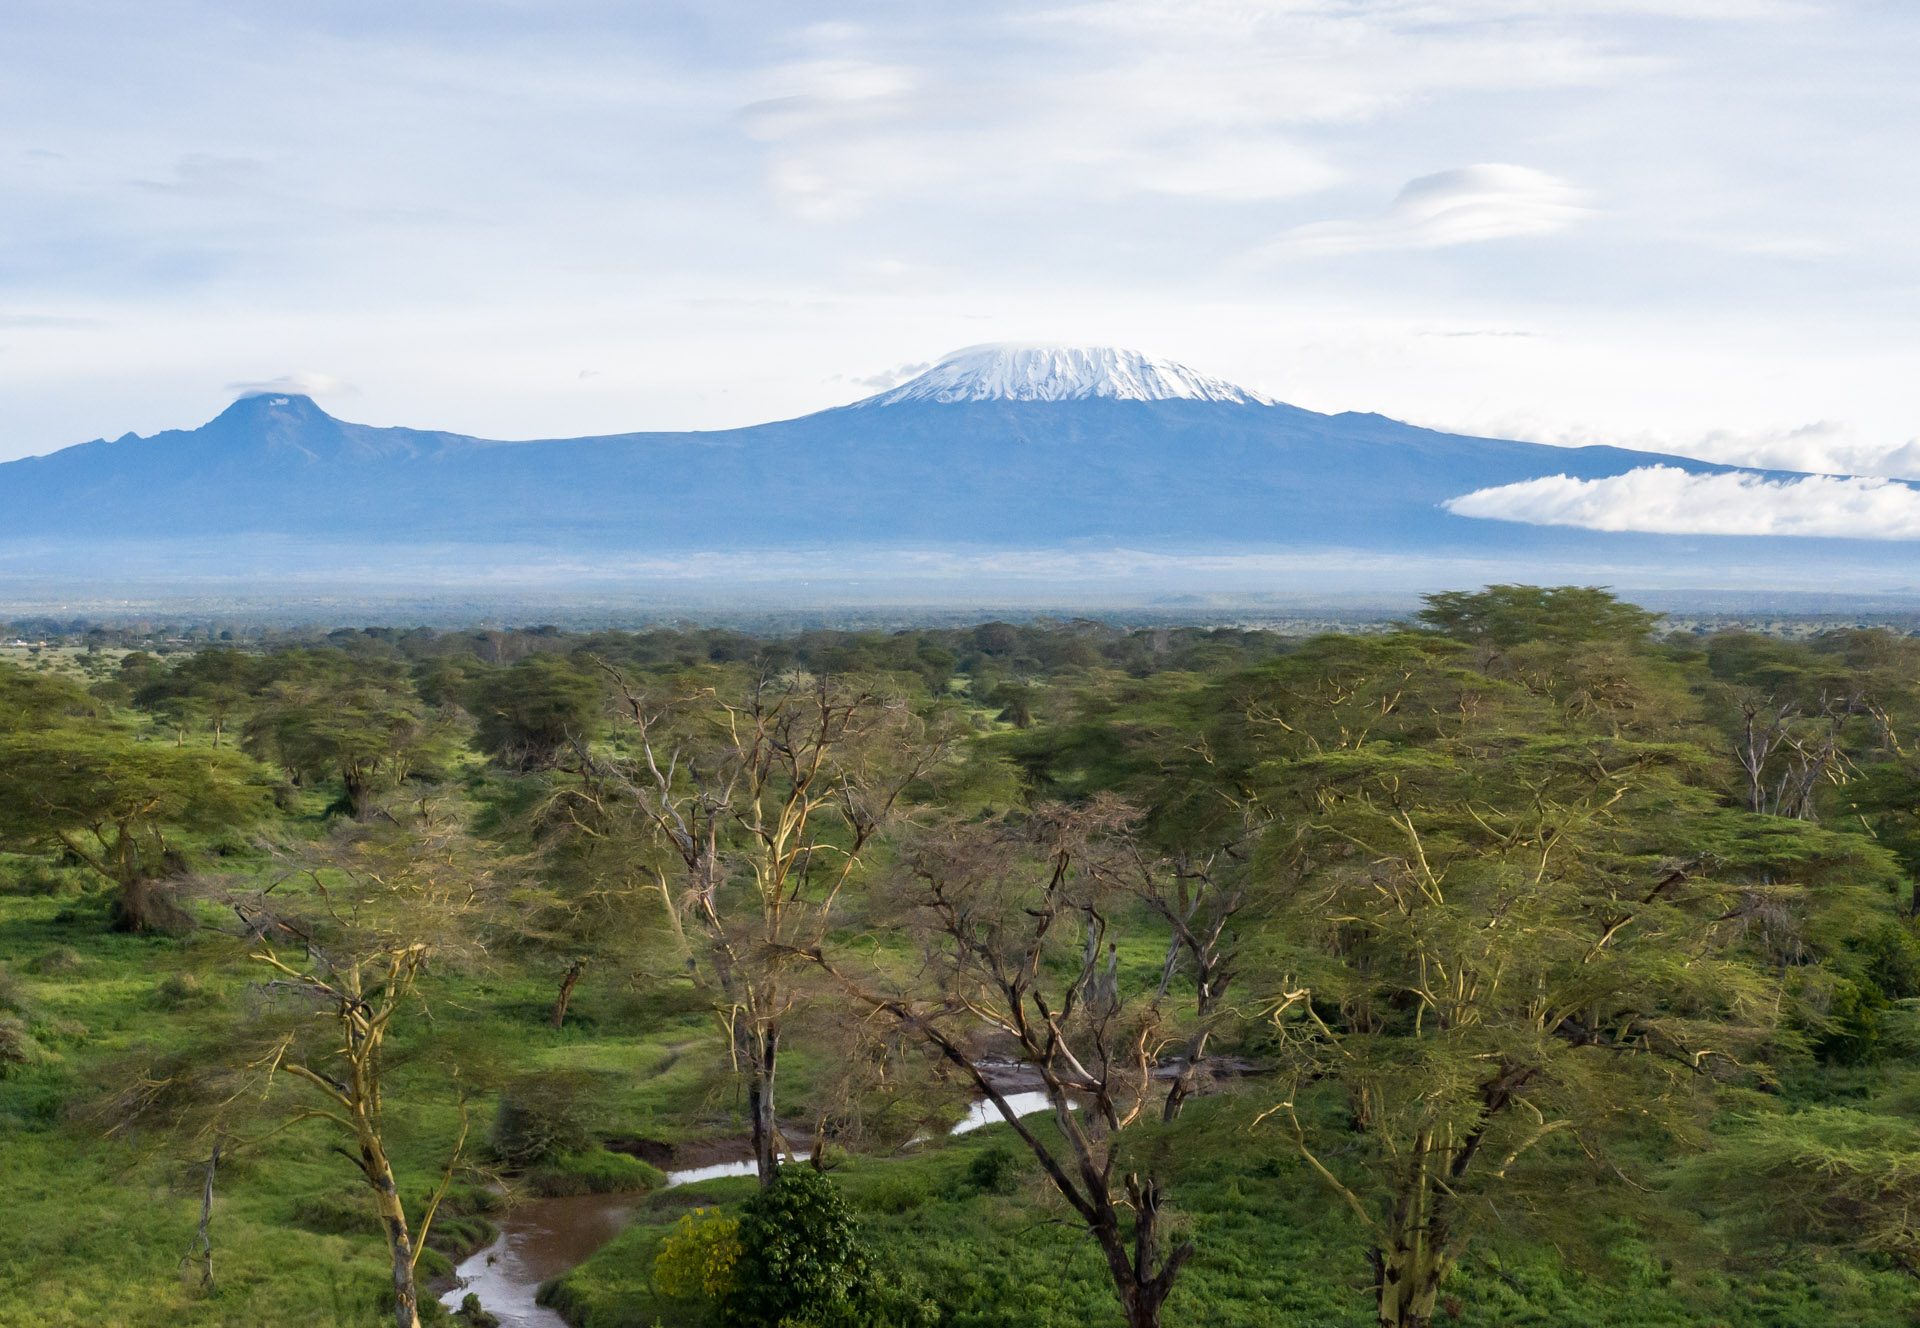 Mount Kilimanjaro keeping watch over Kimana Sanctuary